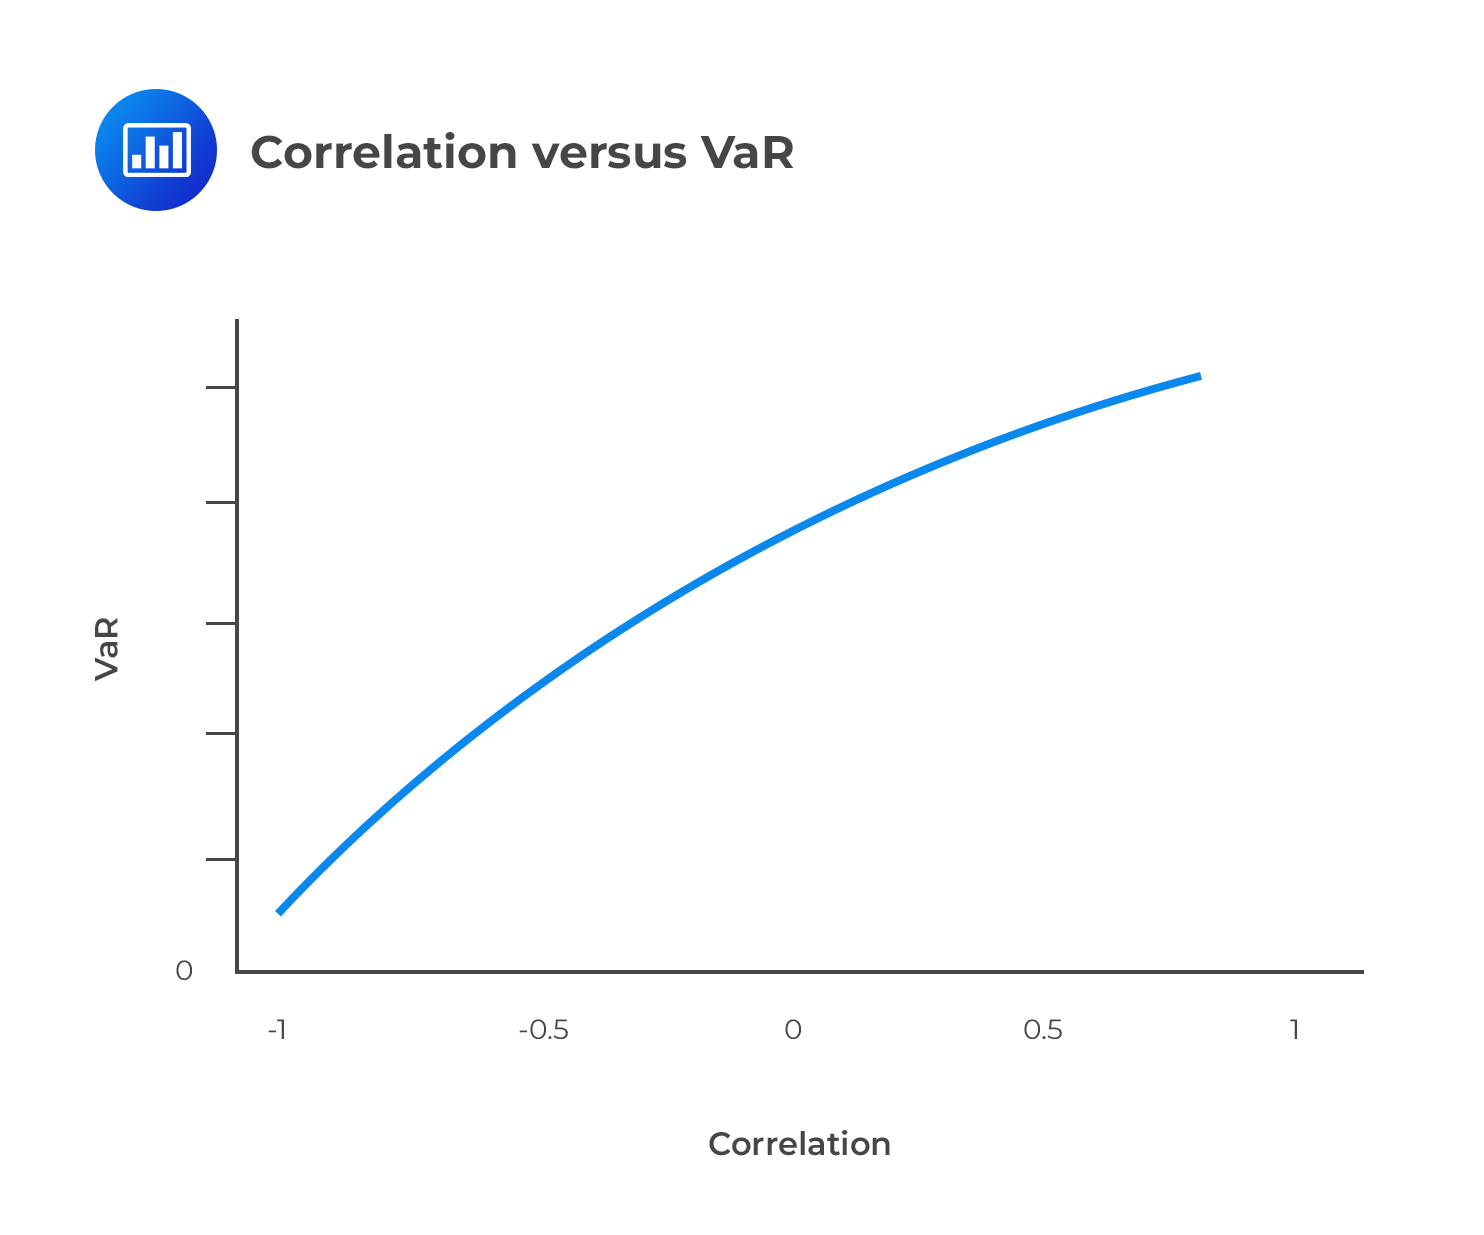 Correlation versus VaR